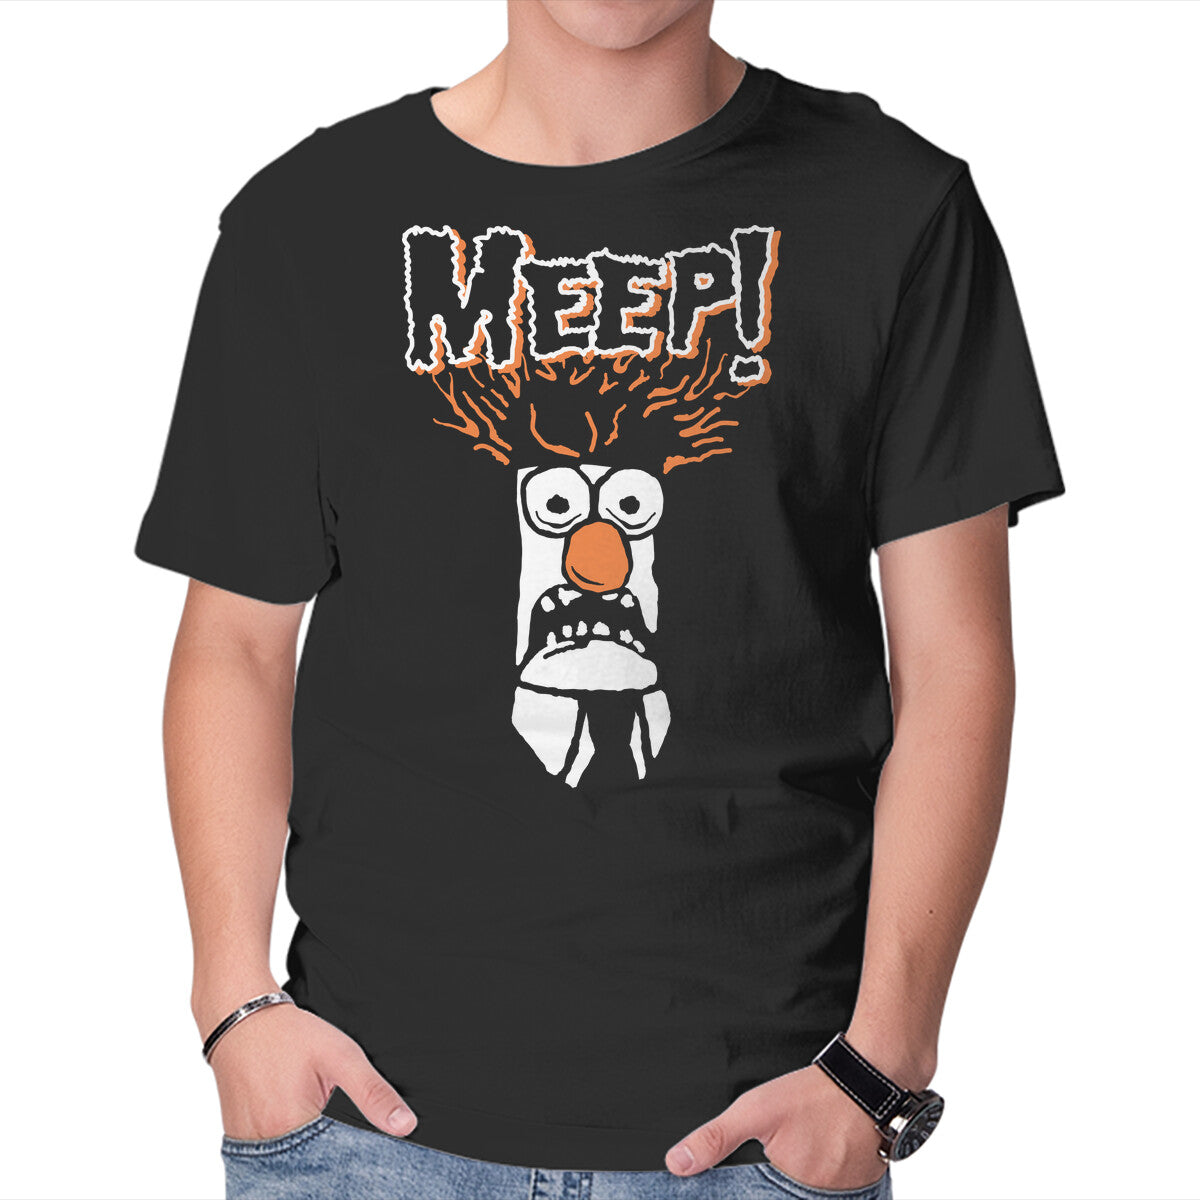 meep' Men's T-Shirt